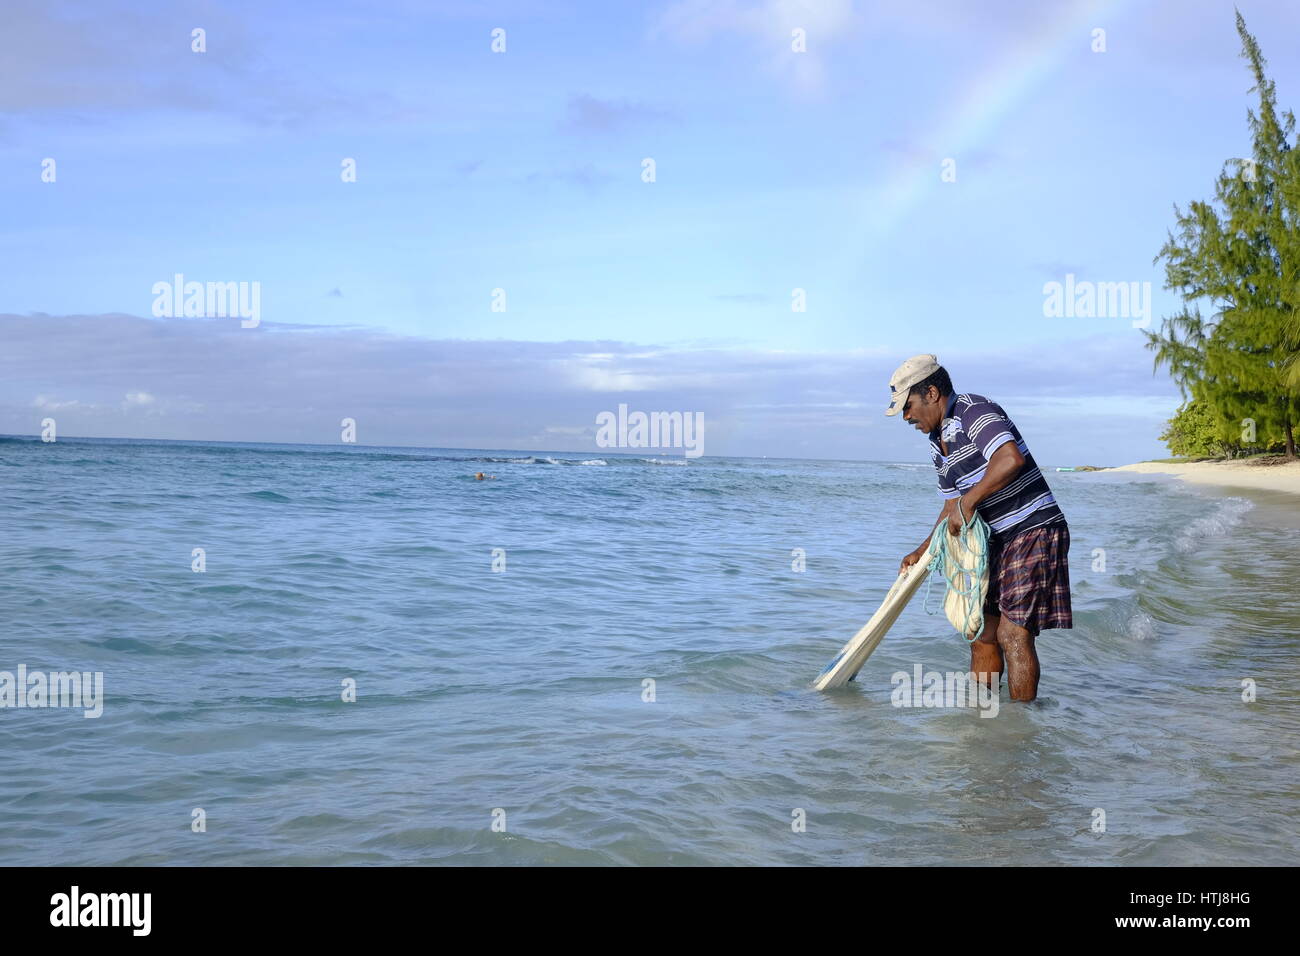 Fisherman casting his net in the sea, Hastings, Barbados, Caribbean Stock Photo